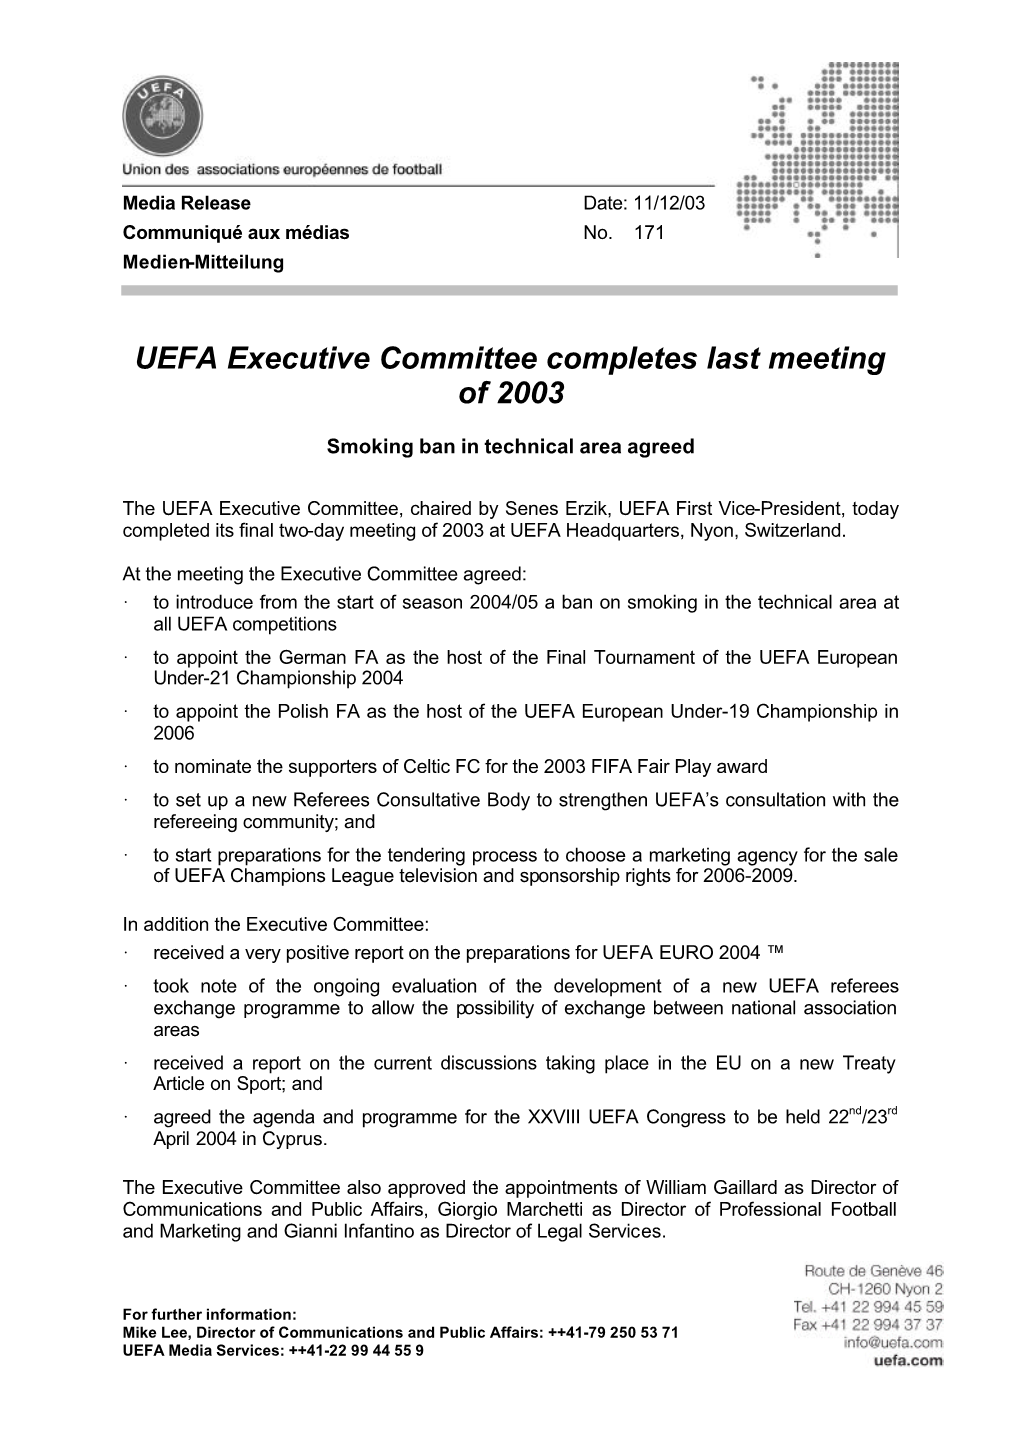 UEFA Executive Committee Completes Last Meeting of 2003